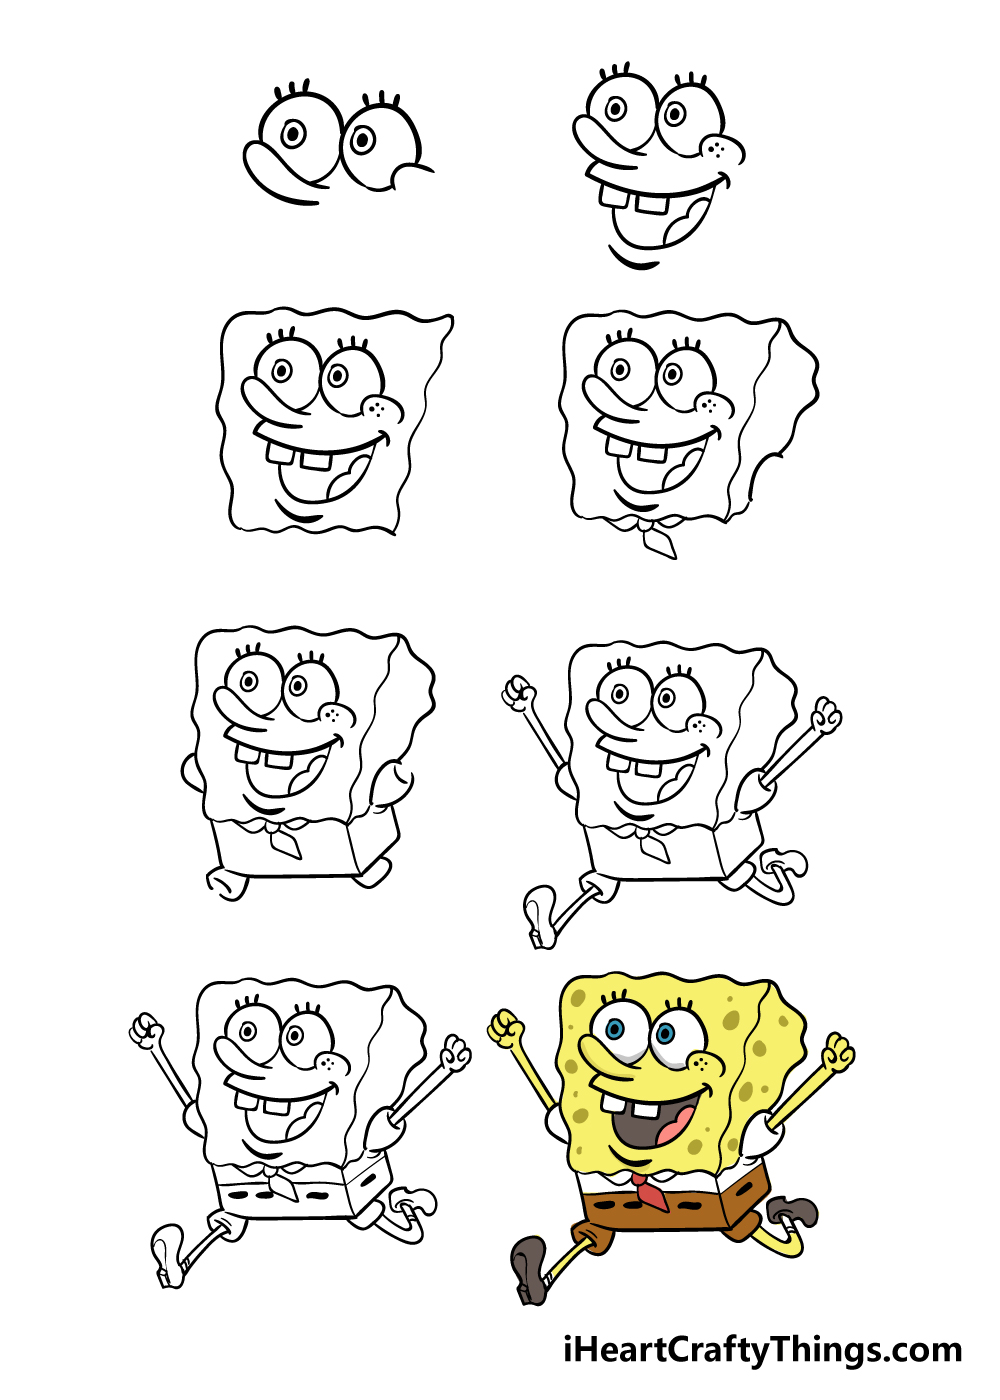 how to draw spongebob in 8 steps